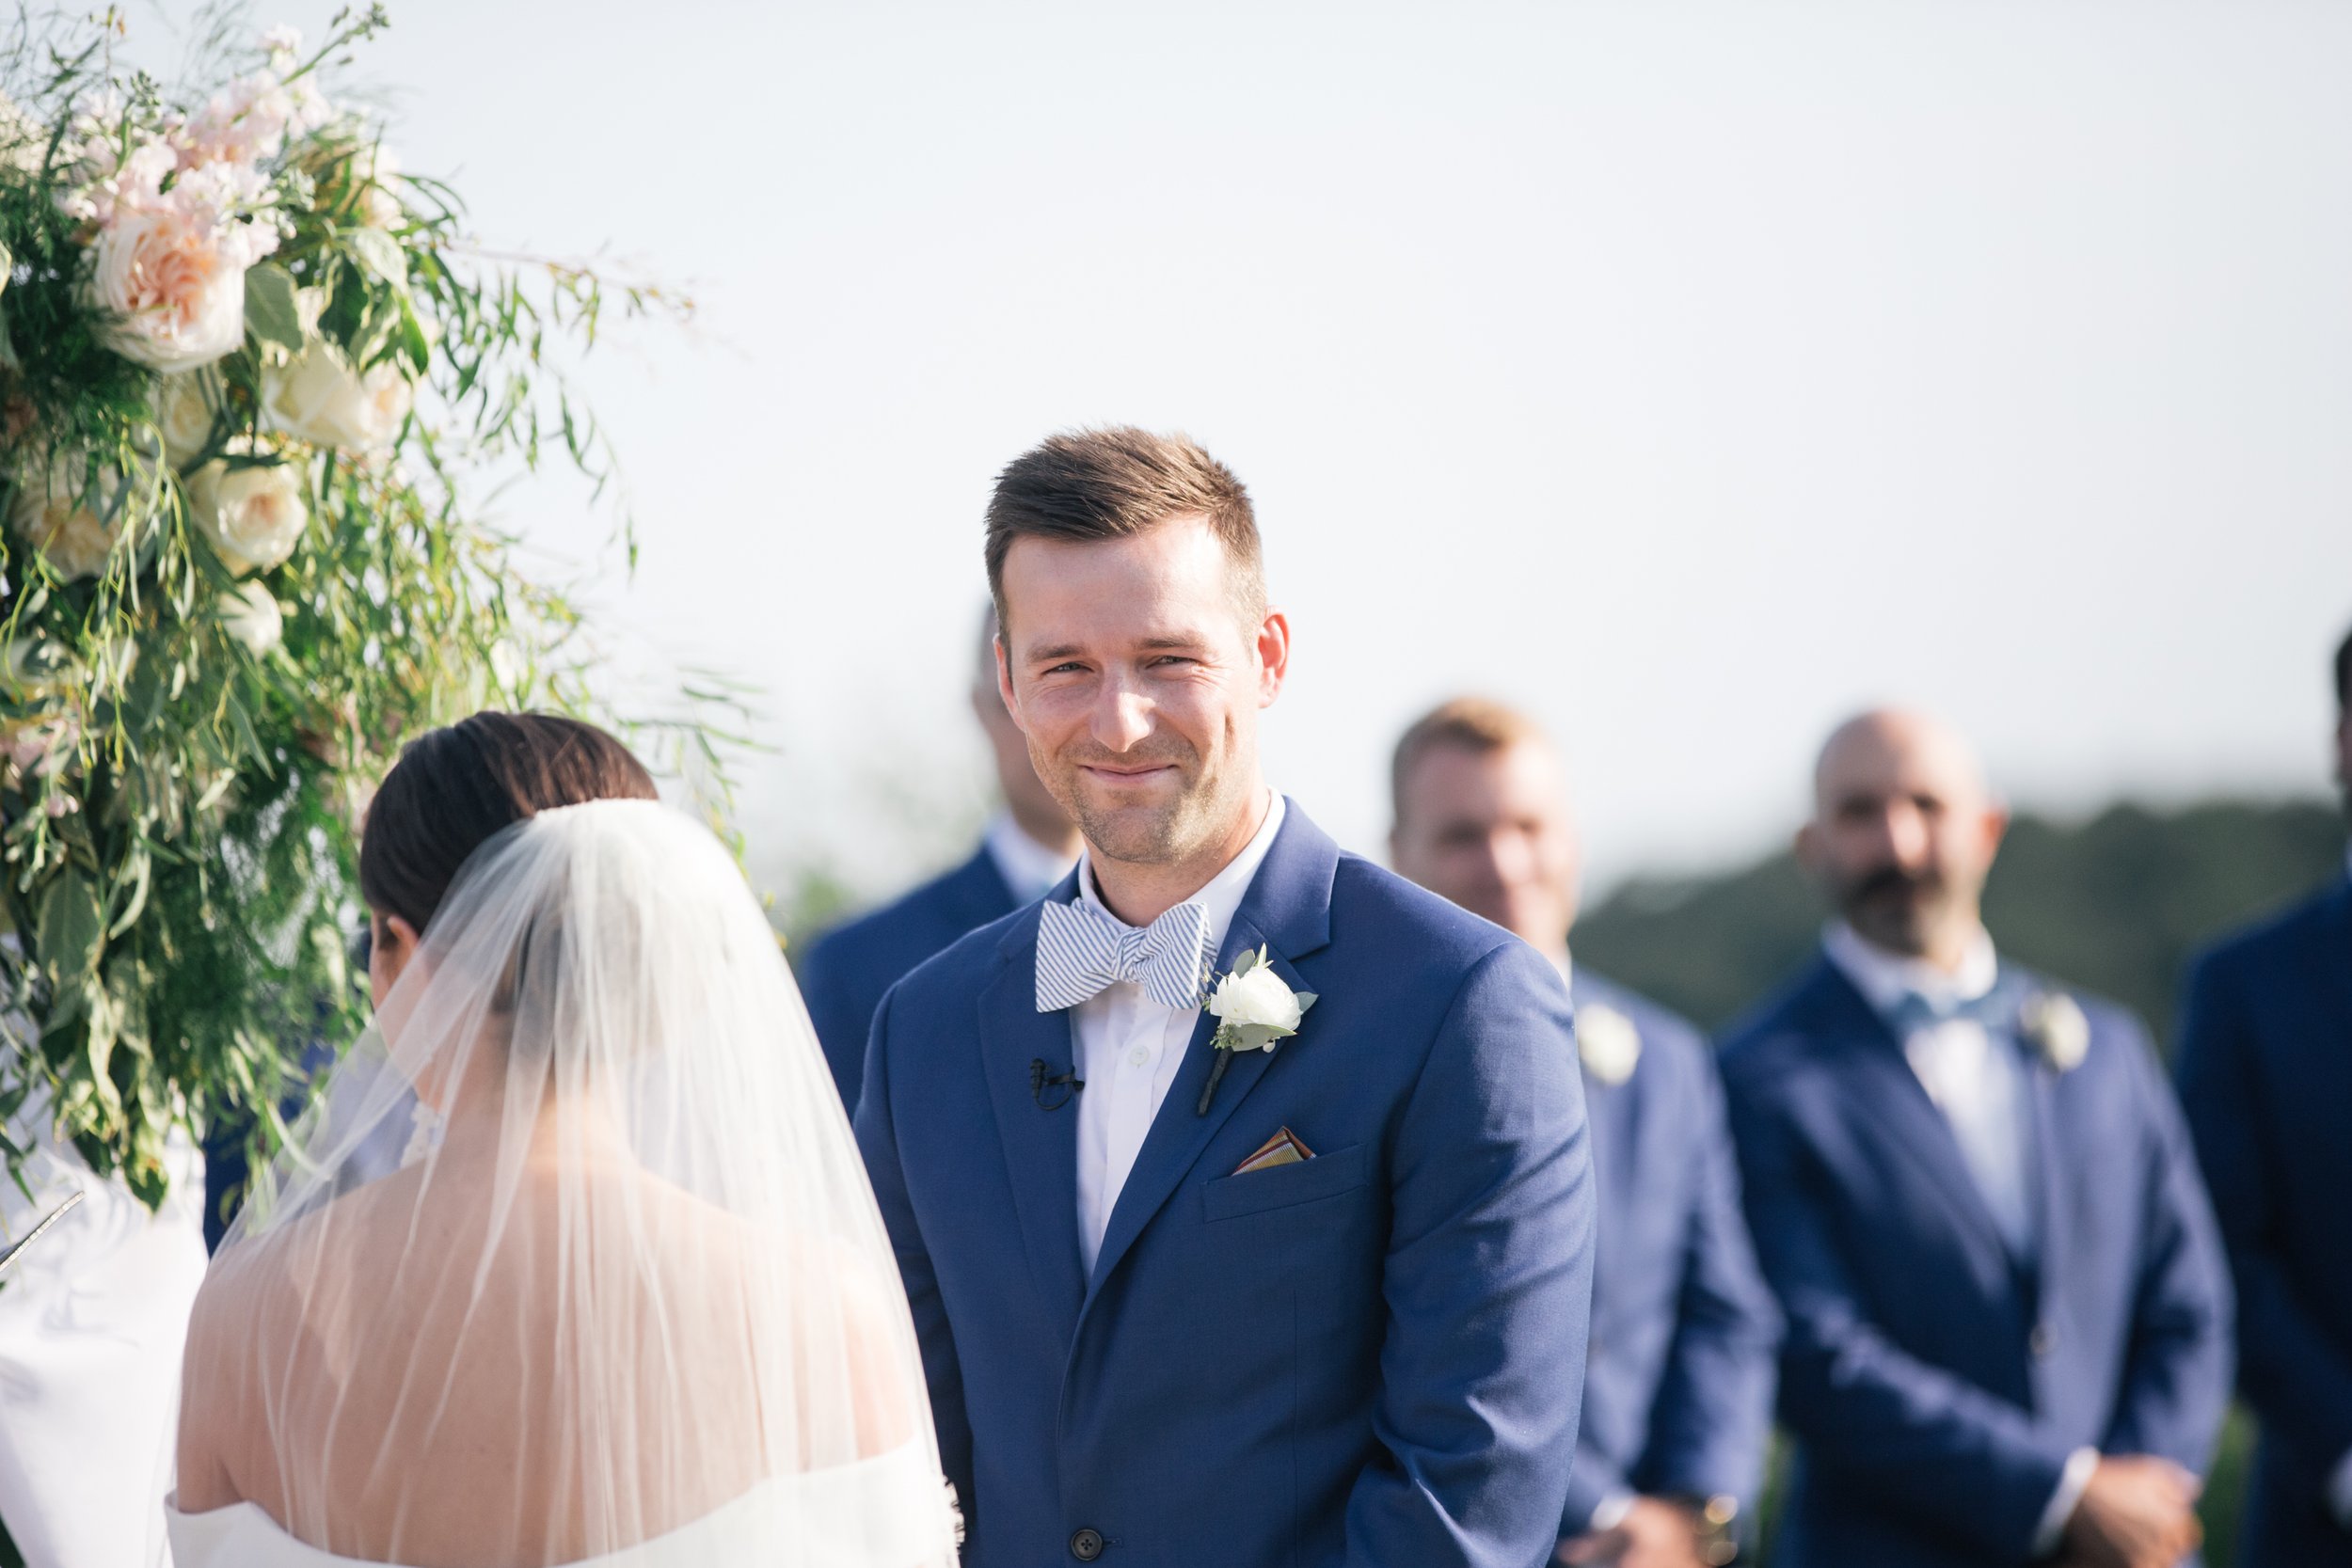 CONNECTICUT WEDDING PHOTOGRAPHER CANDID CEREMONY IMAGE